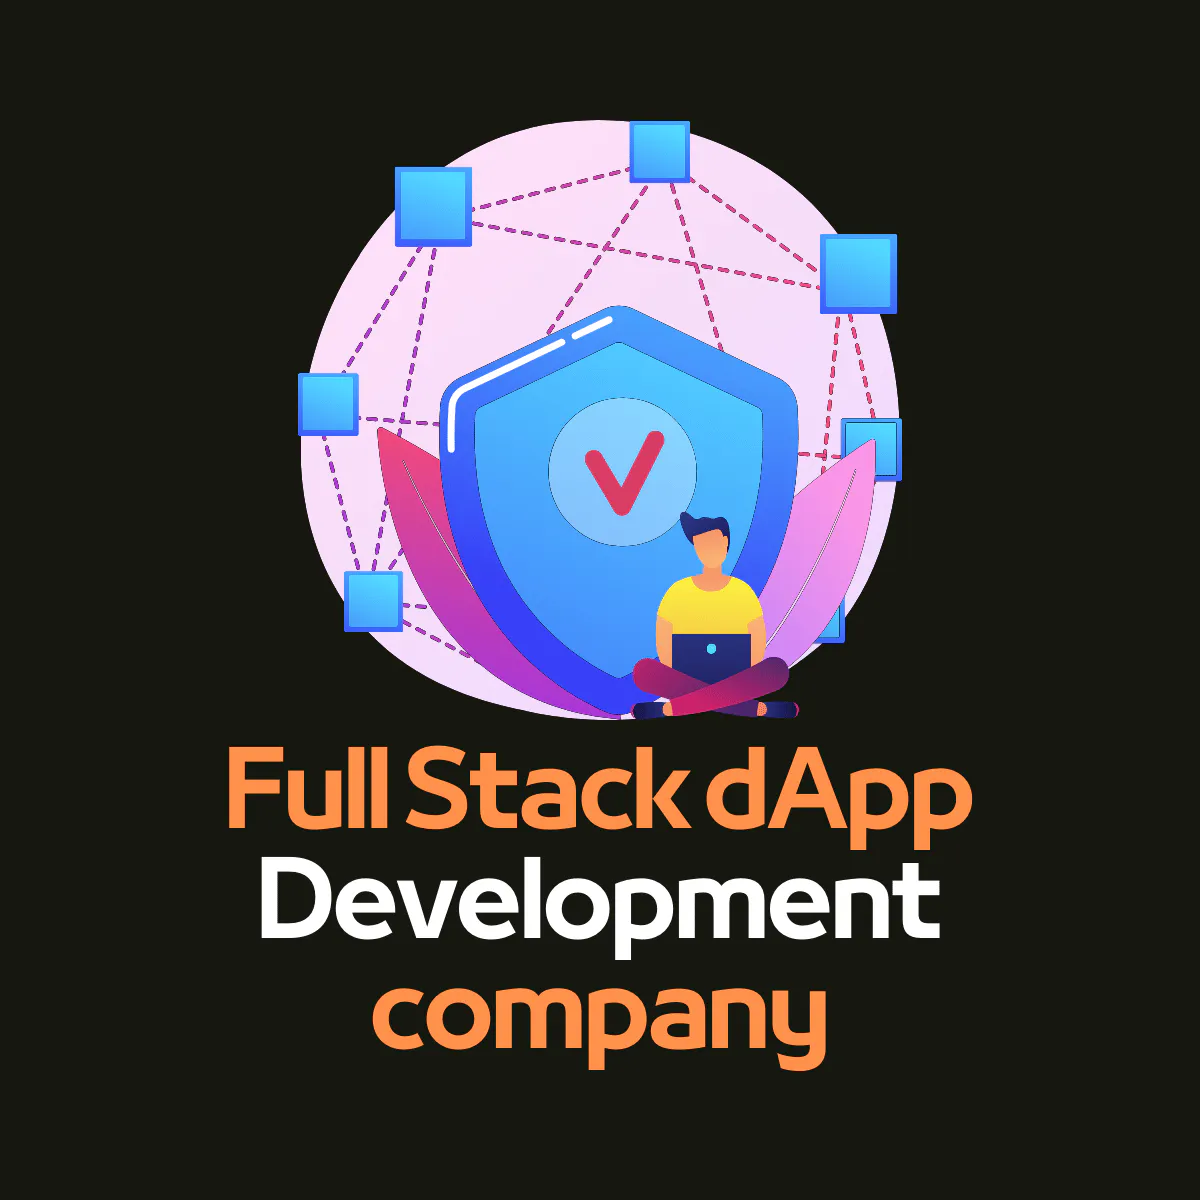 Full Stack dApp Development